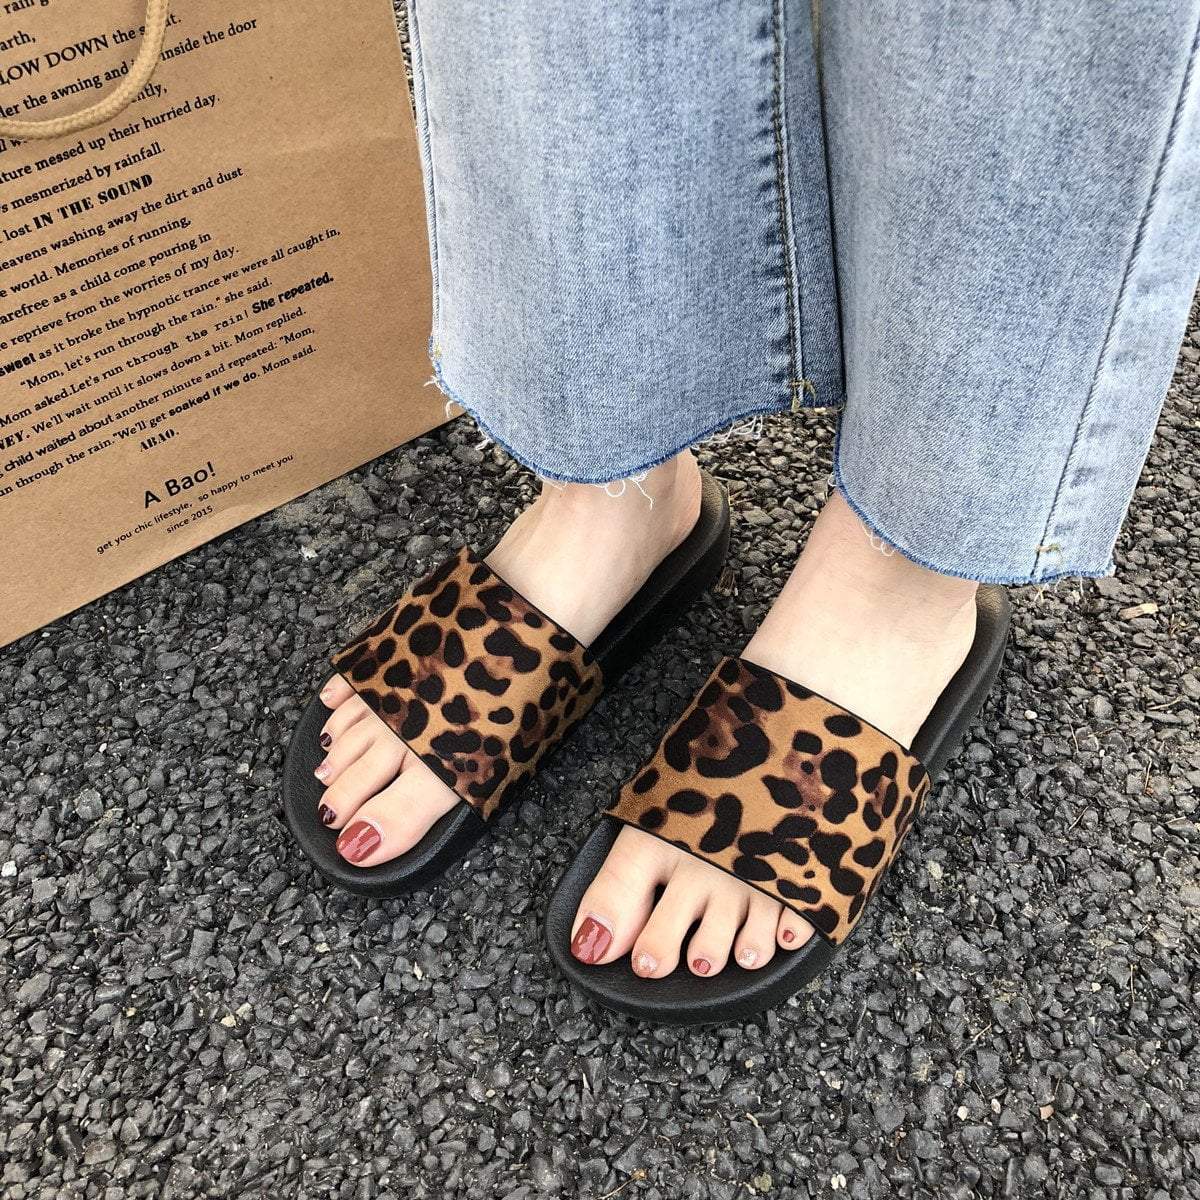 Leopard Print Black Flat Sole Rubber Summer Sandals